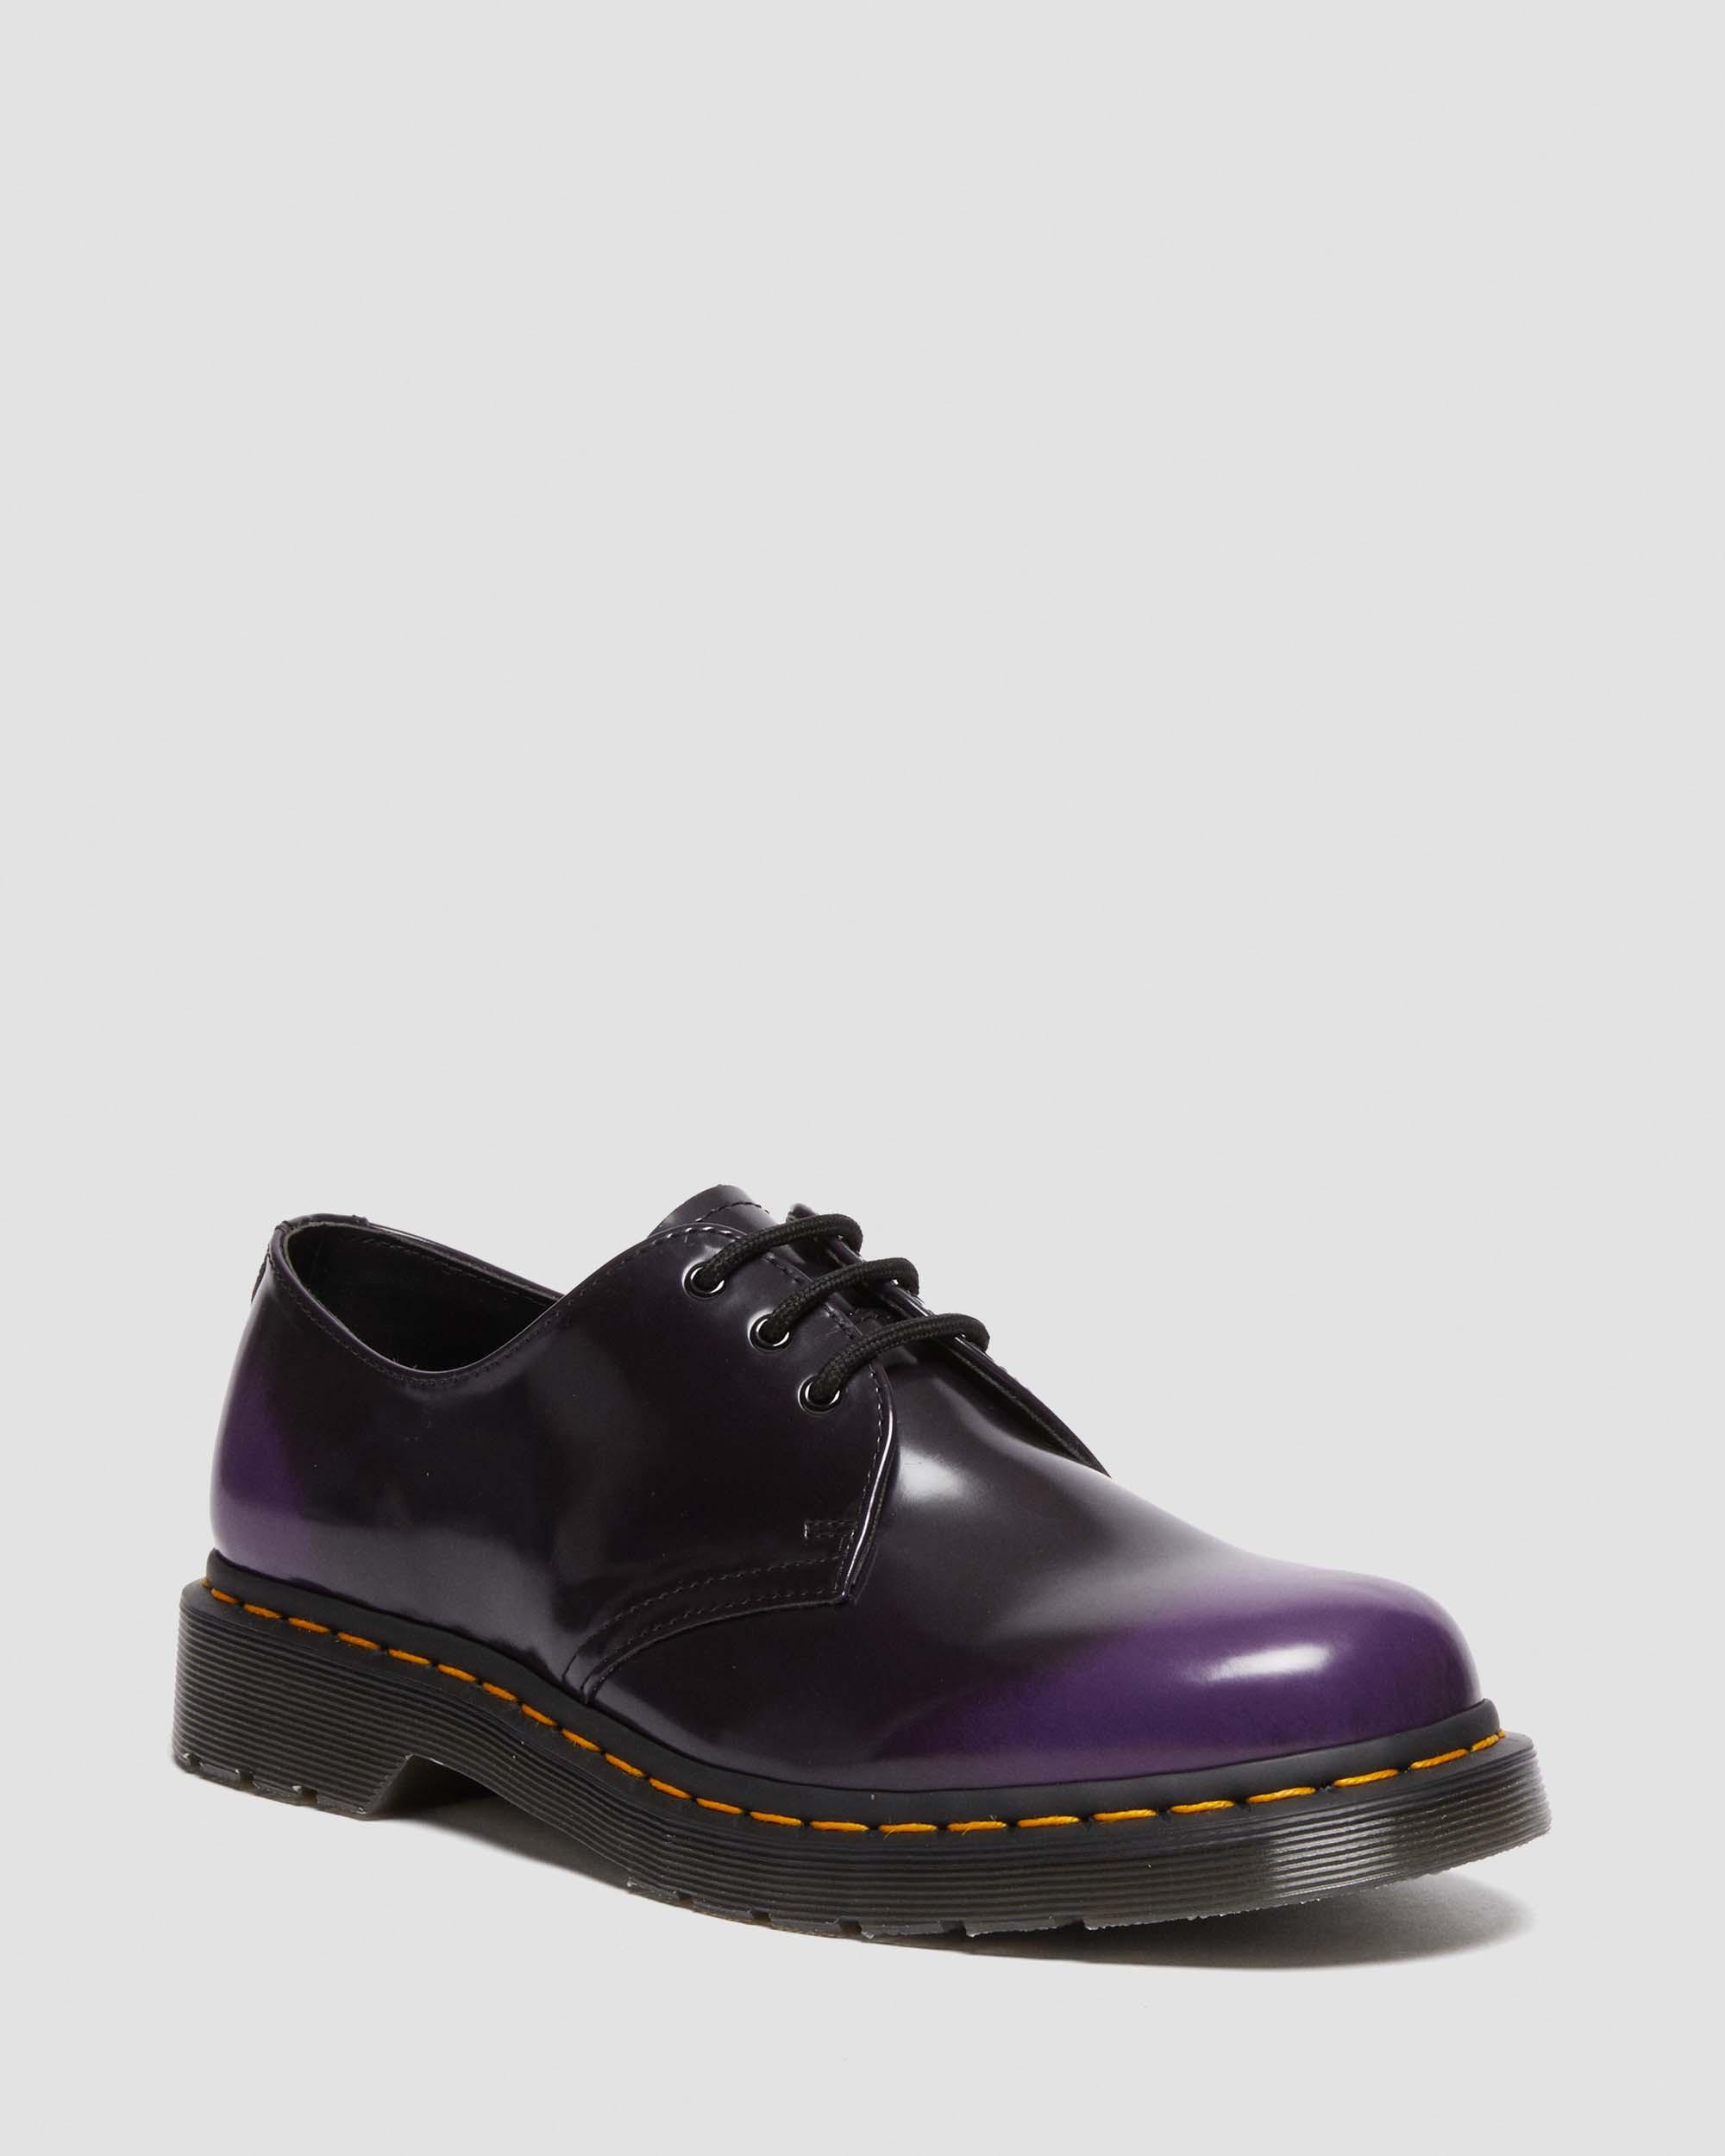 Vegan 1461 Oxford Shoes in Black/rich Purple | Dr. Martens